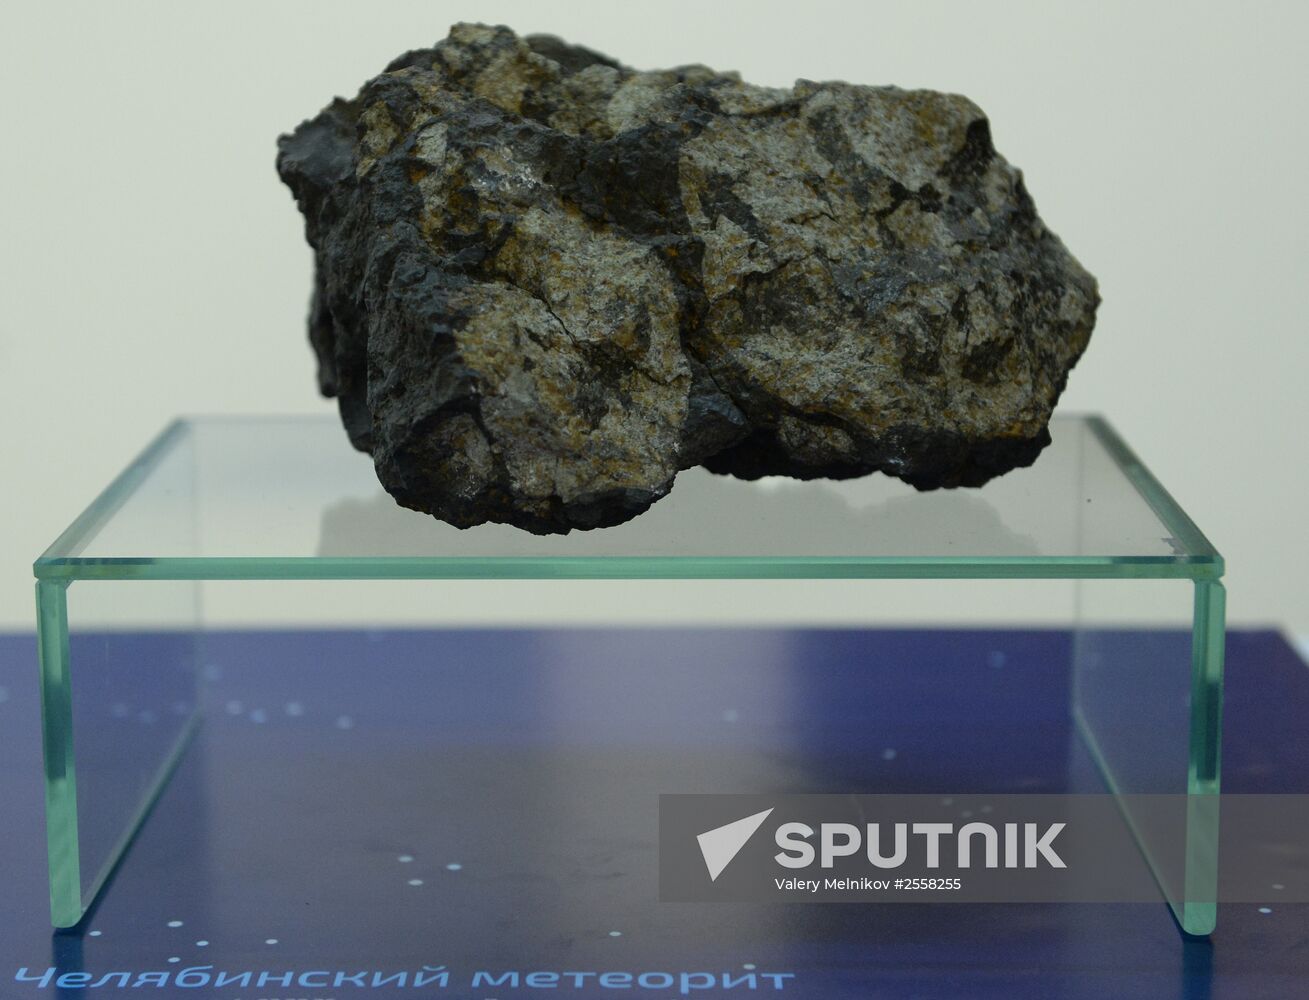 Chelyabinsk meteor on display in Moscow